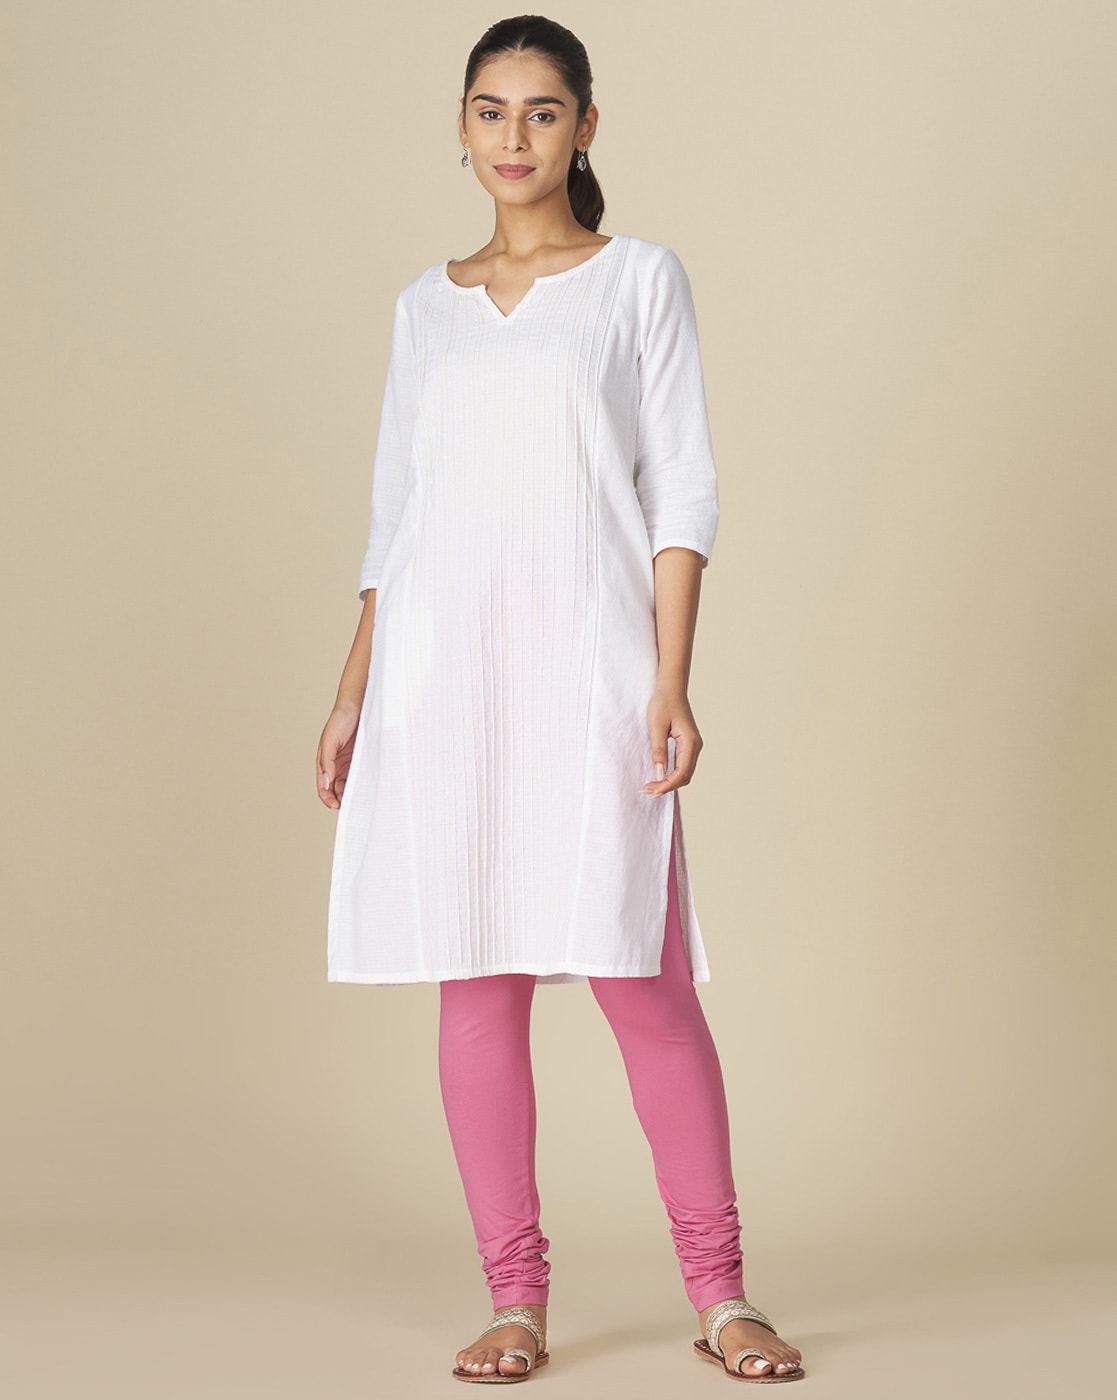 Buy Fabindia Cotton Blend Regular Fit Pink Elastic Churidar online